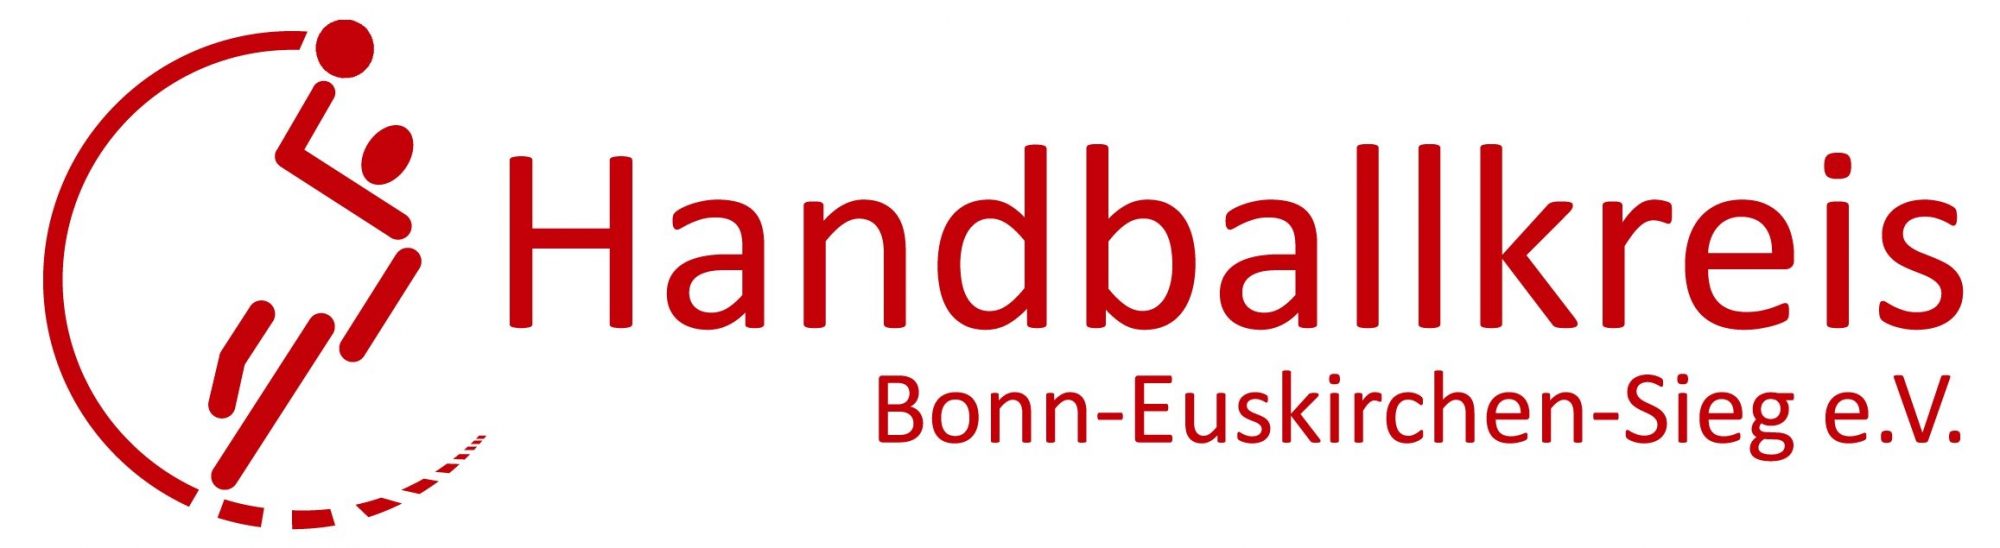 Handballkreis Bonn / Euskirchen / Sieg